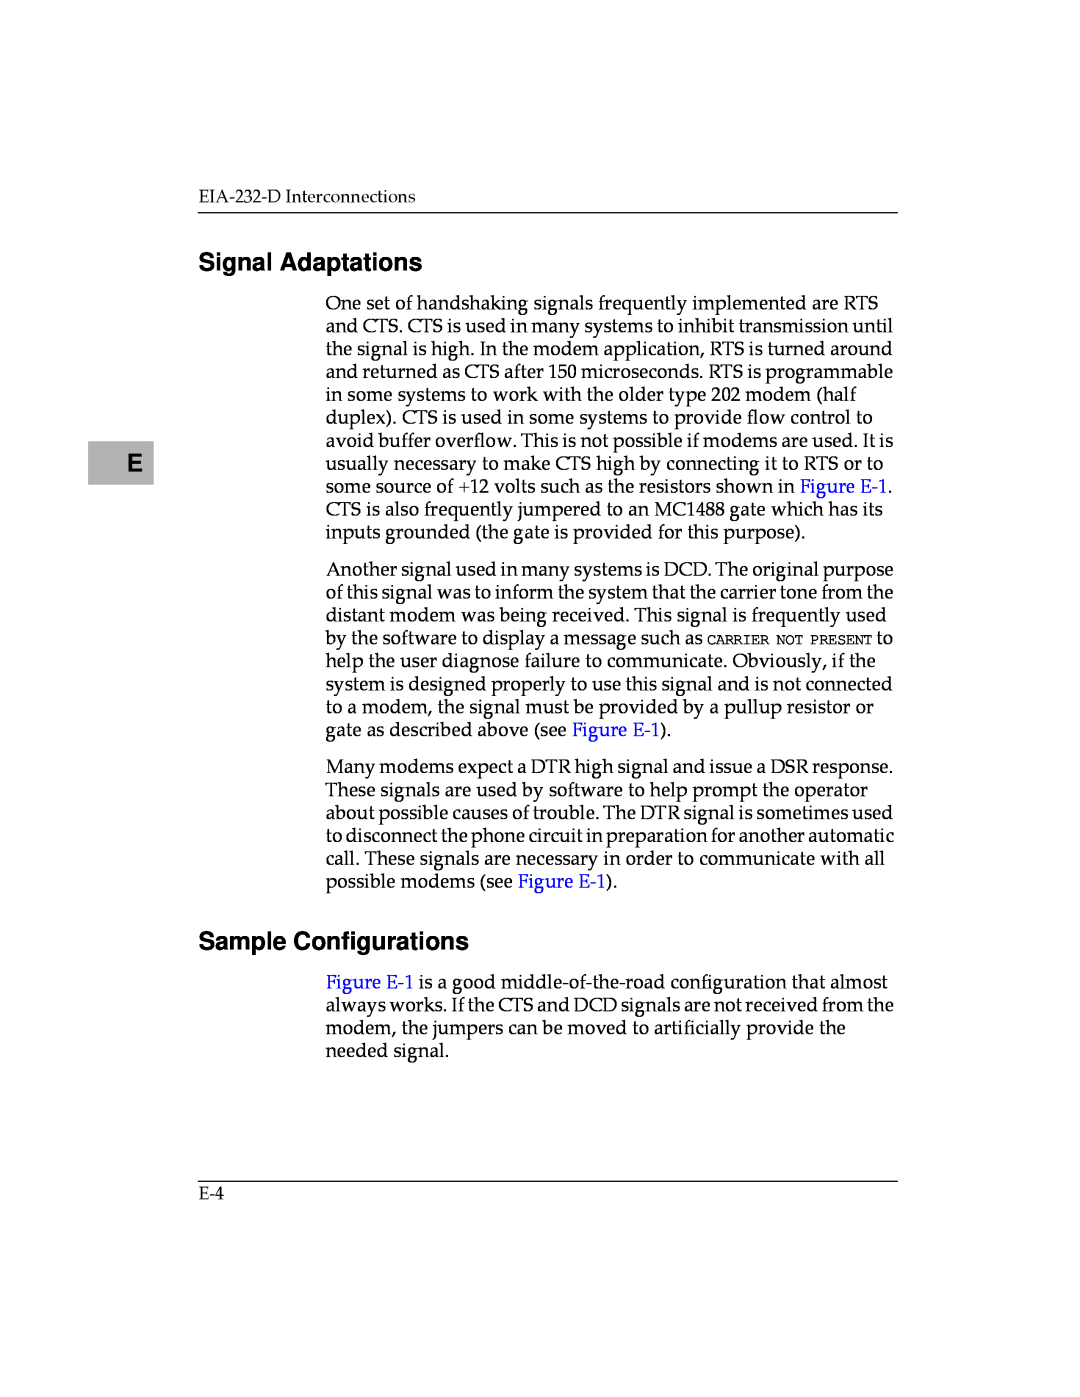 Motorola MVME187 manual Signal Adaptations, Sample Conﬁgurations 